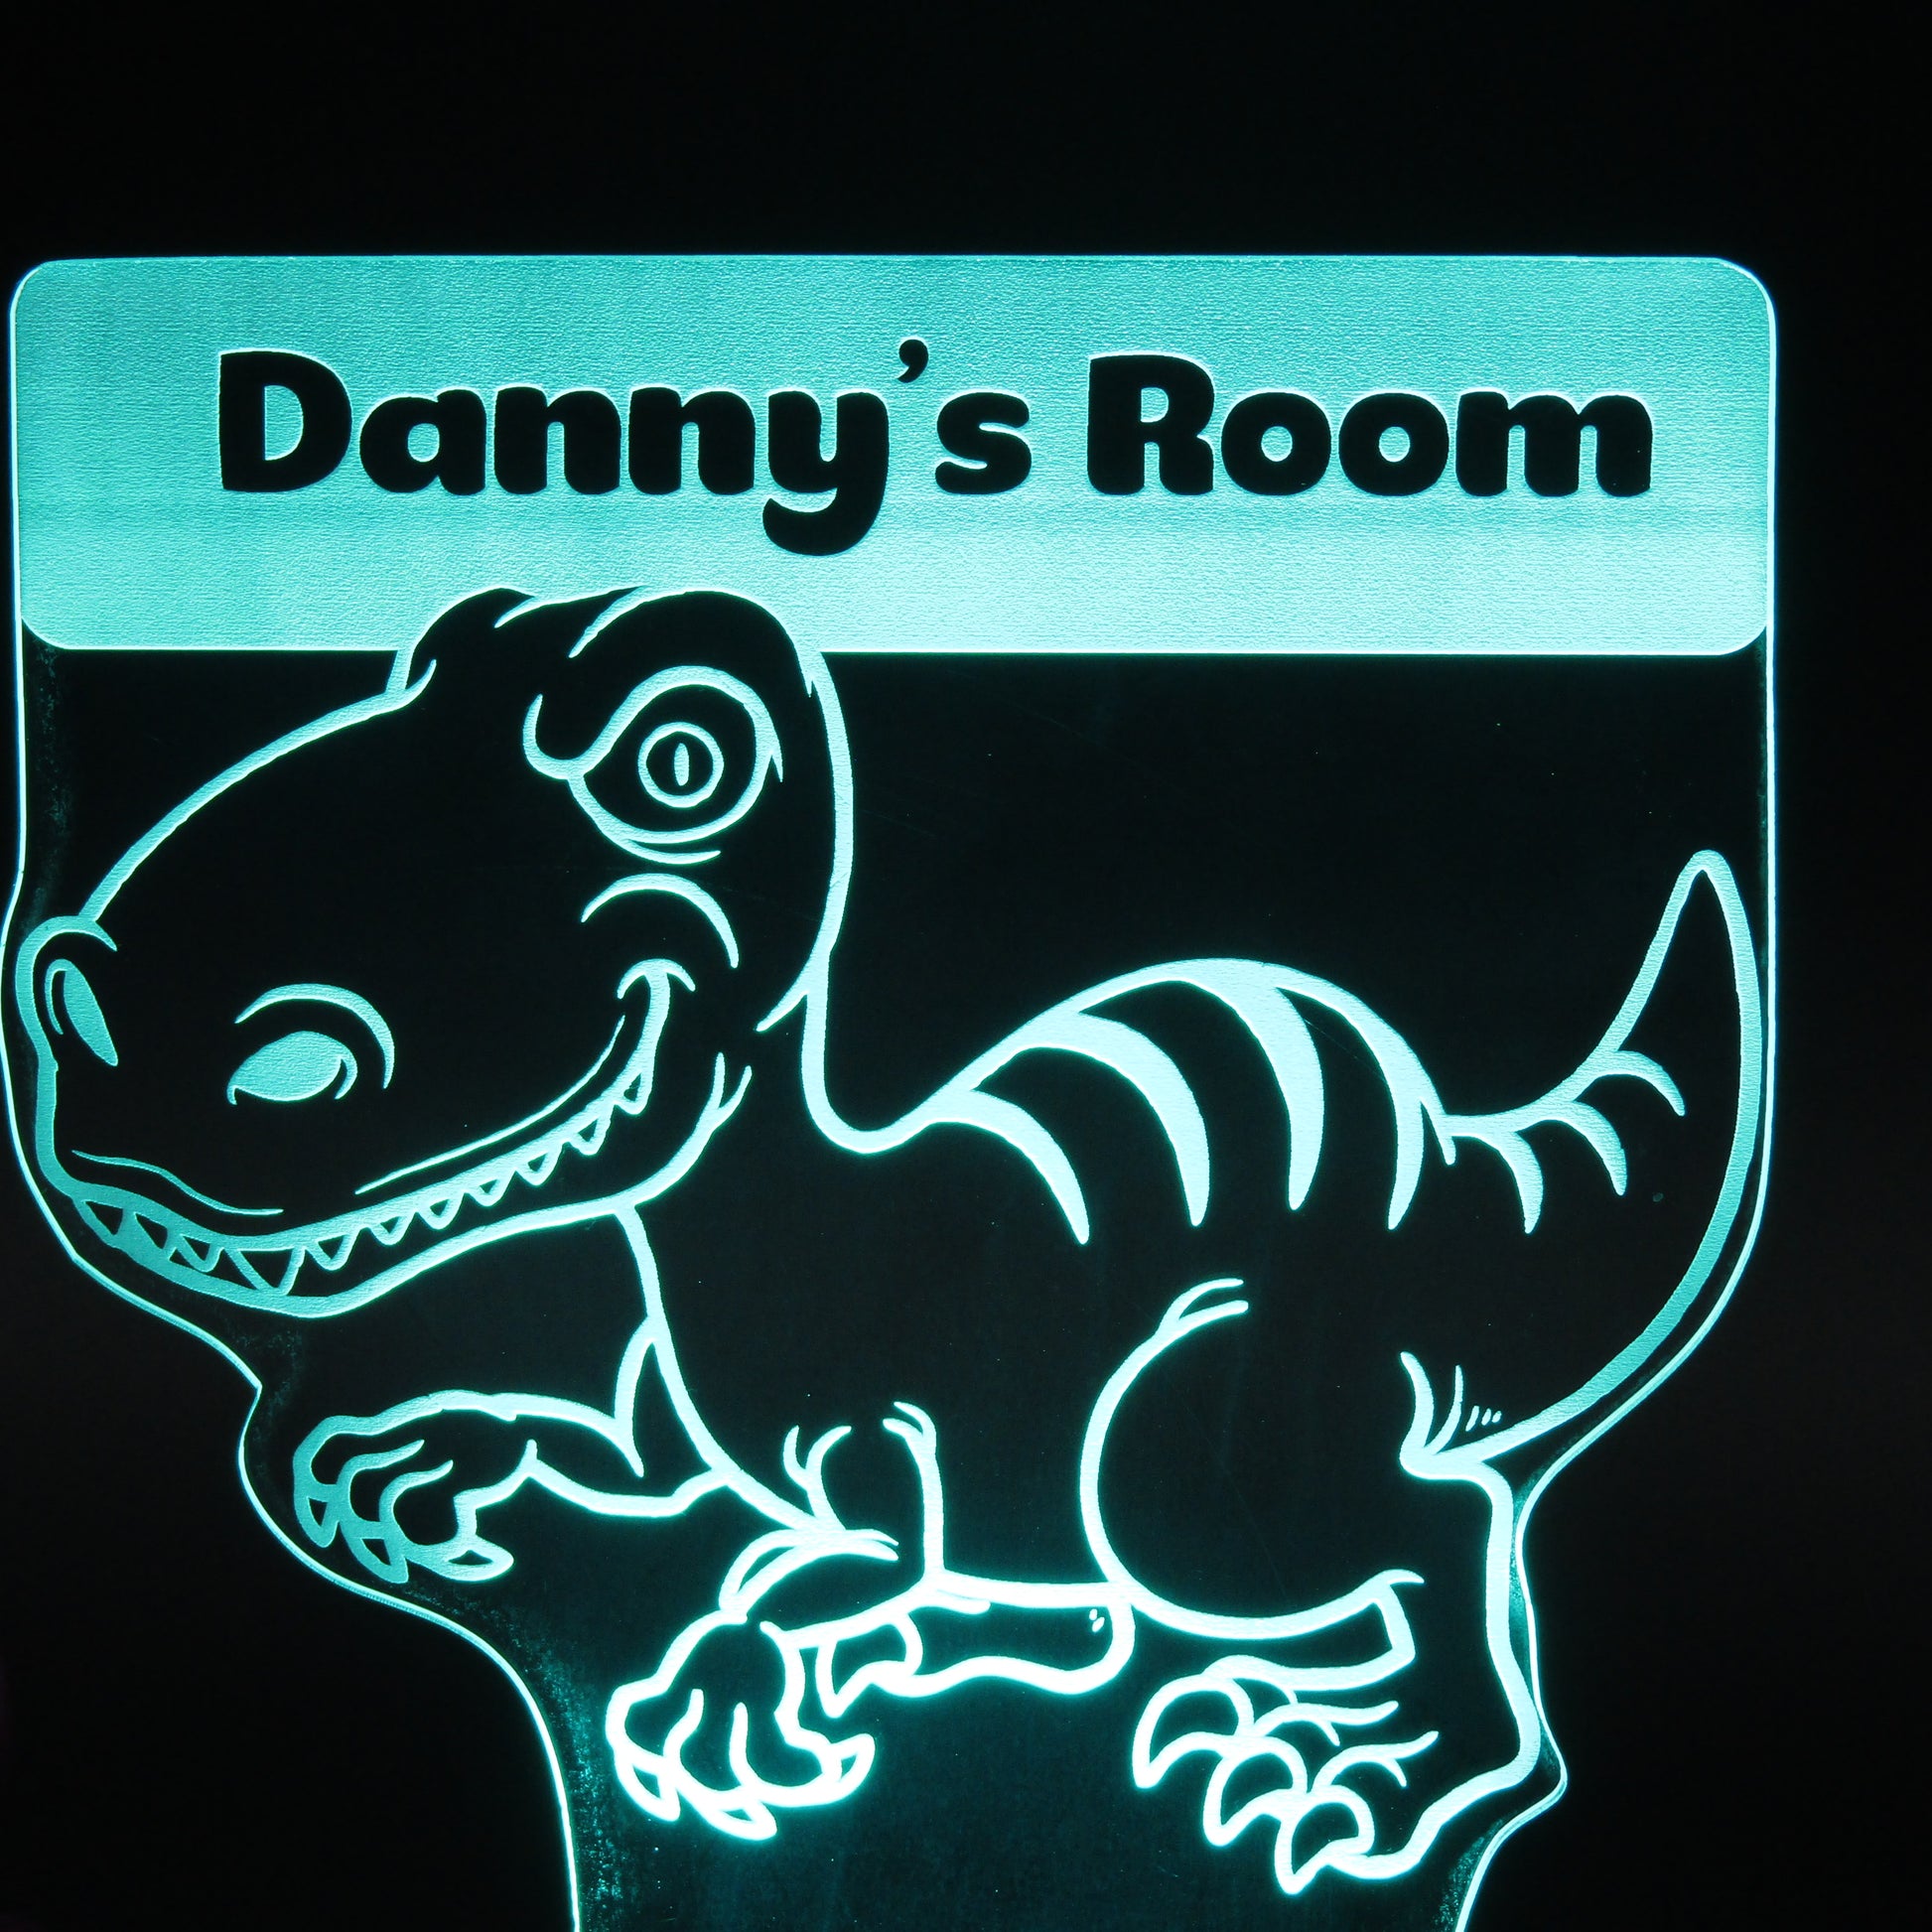 Personalized gifts Dinosaur Cartoon 3D night light